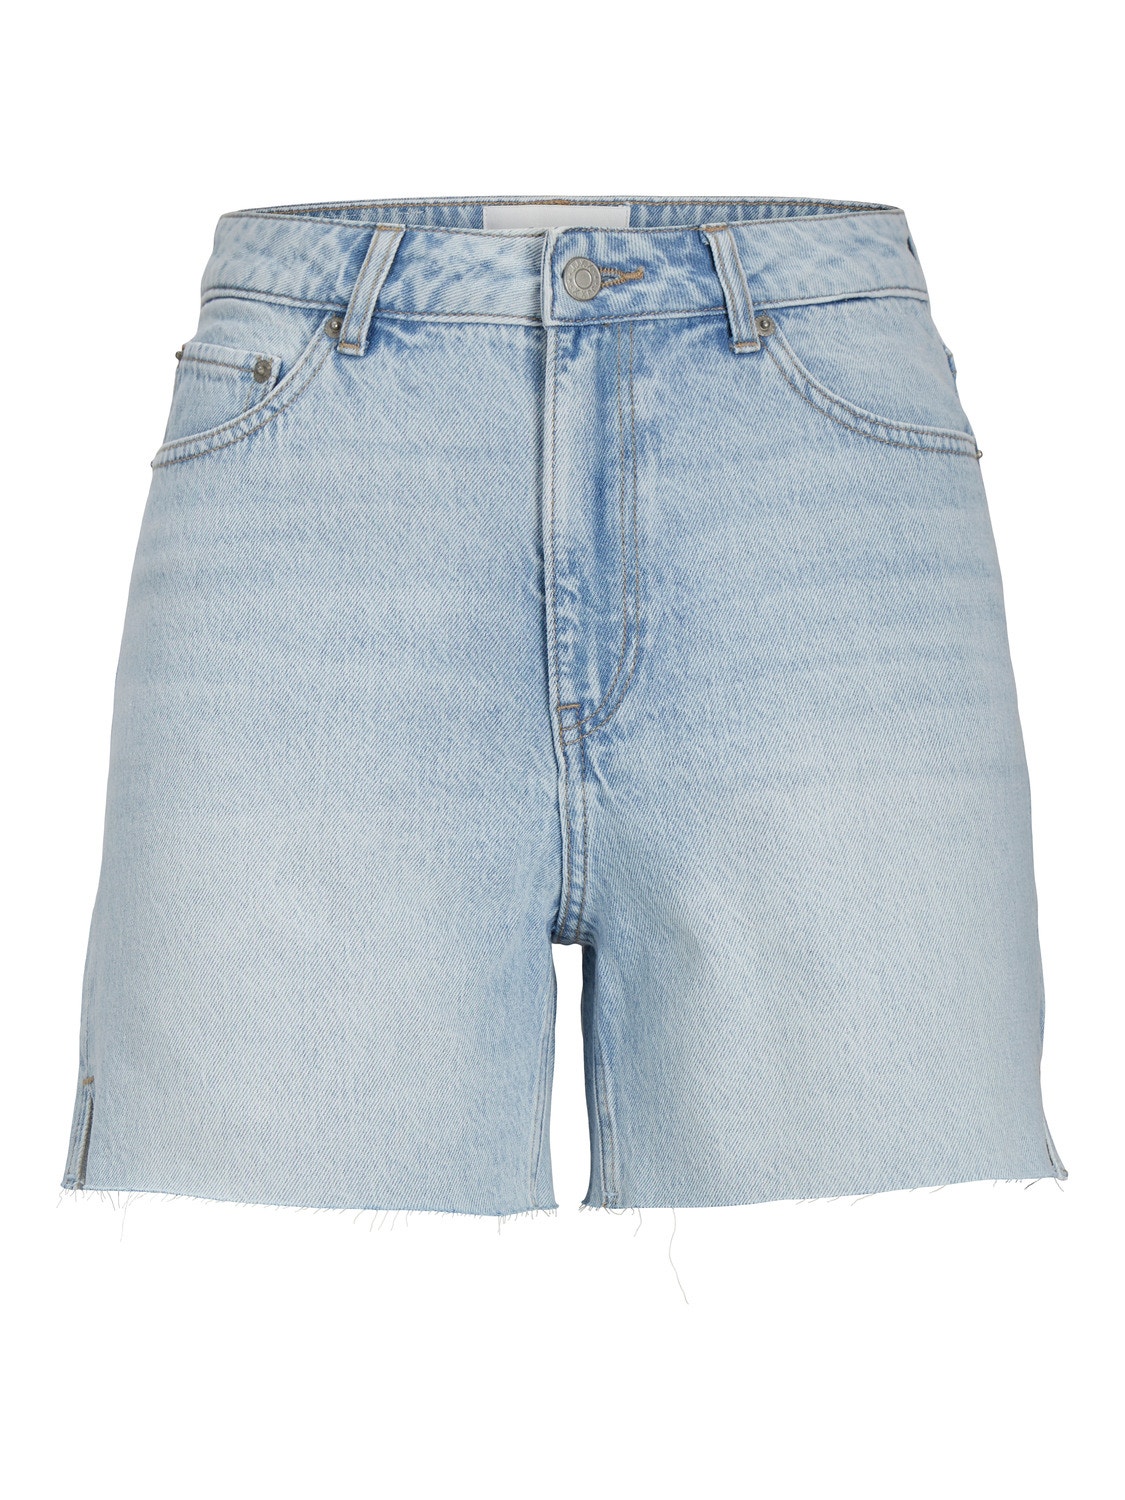 JJXX JXAURA Jeans Shorts -Light Blue Denim - 12227837